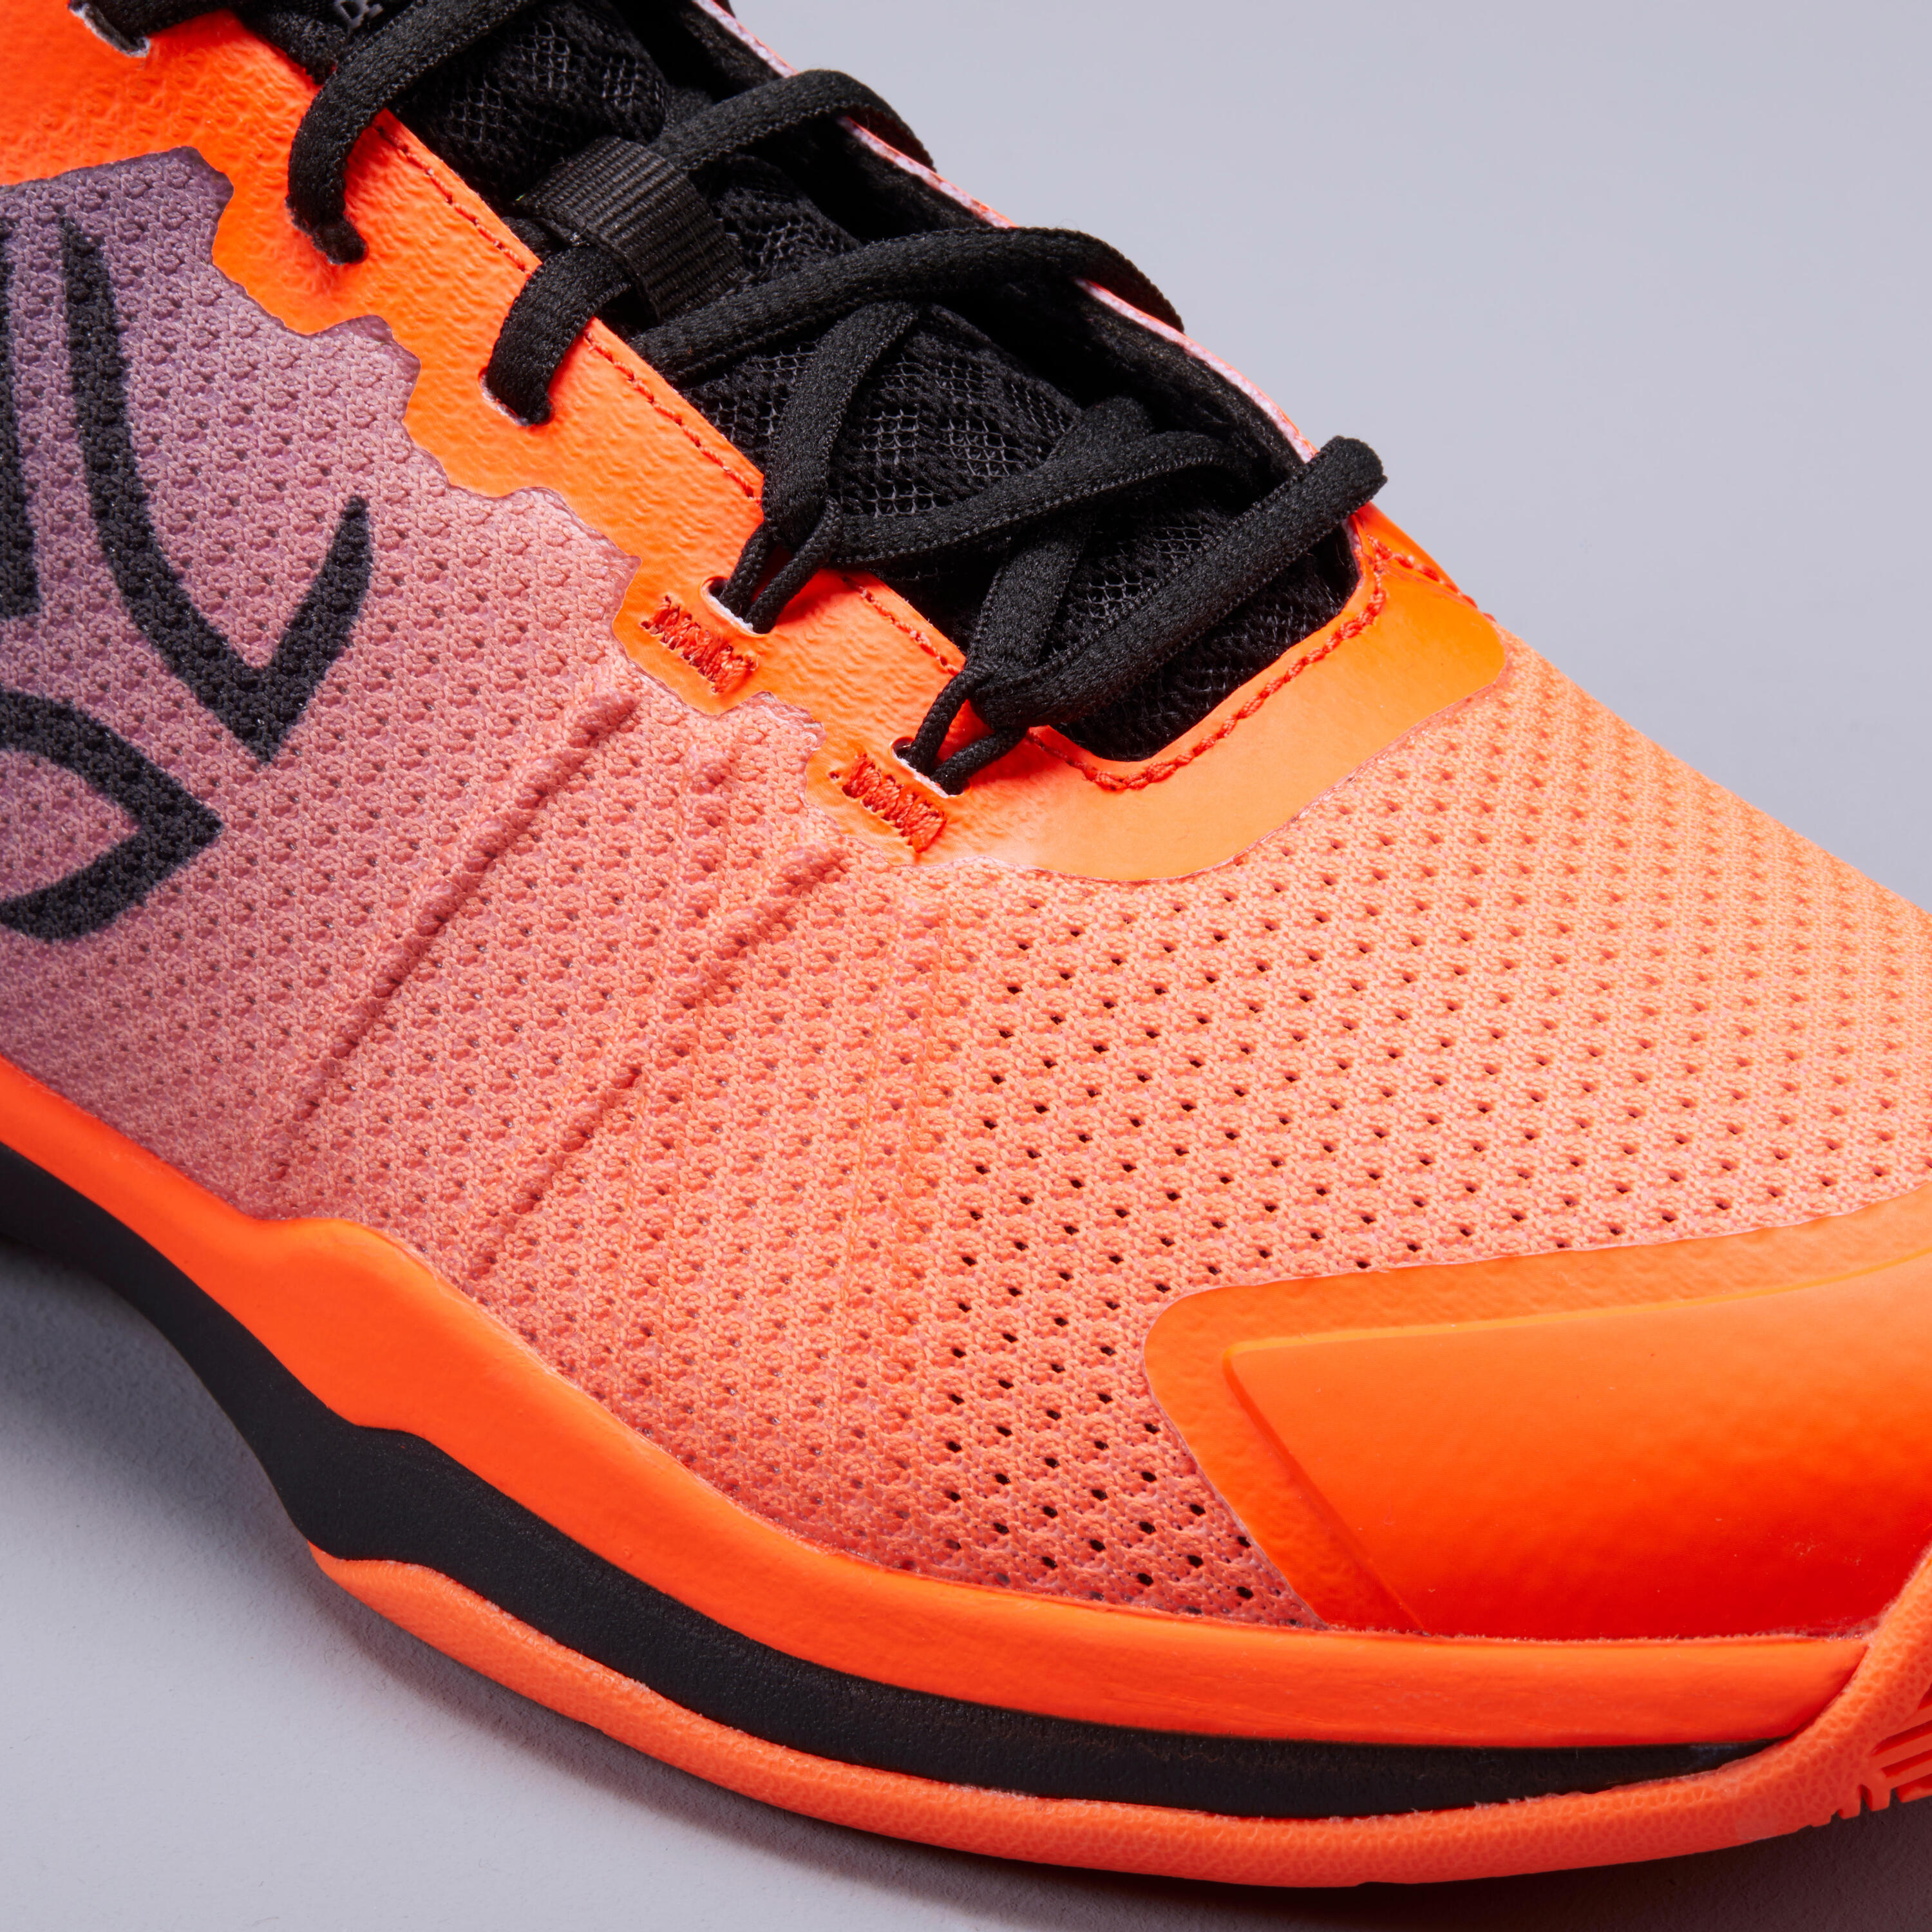 Men's Multi-Court Tennis Shoes TS590 - Orange/Black 8/9